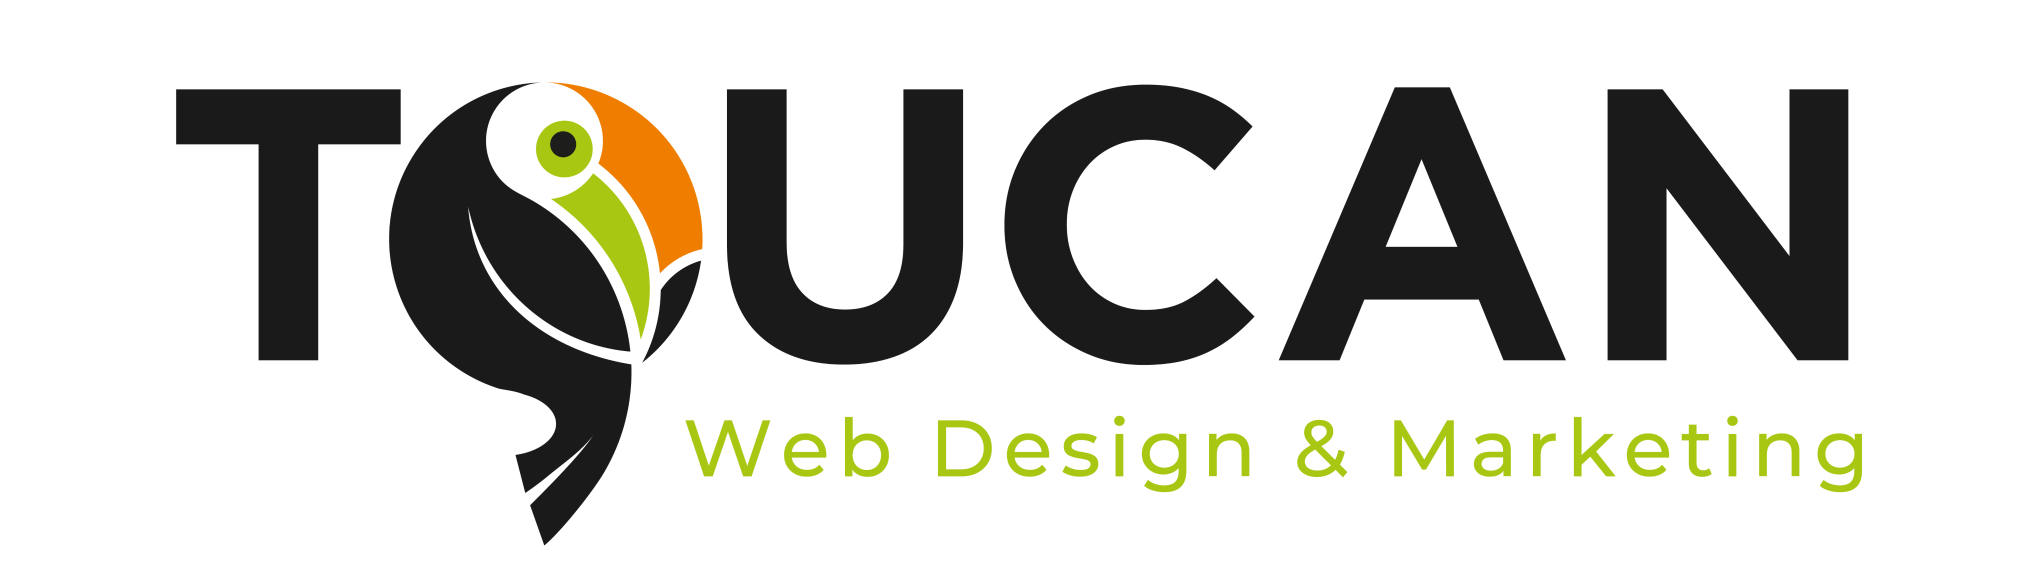 Toucan Web Design & Marketing